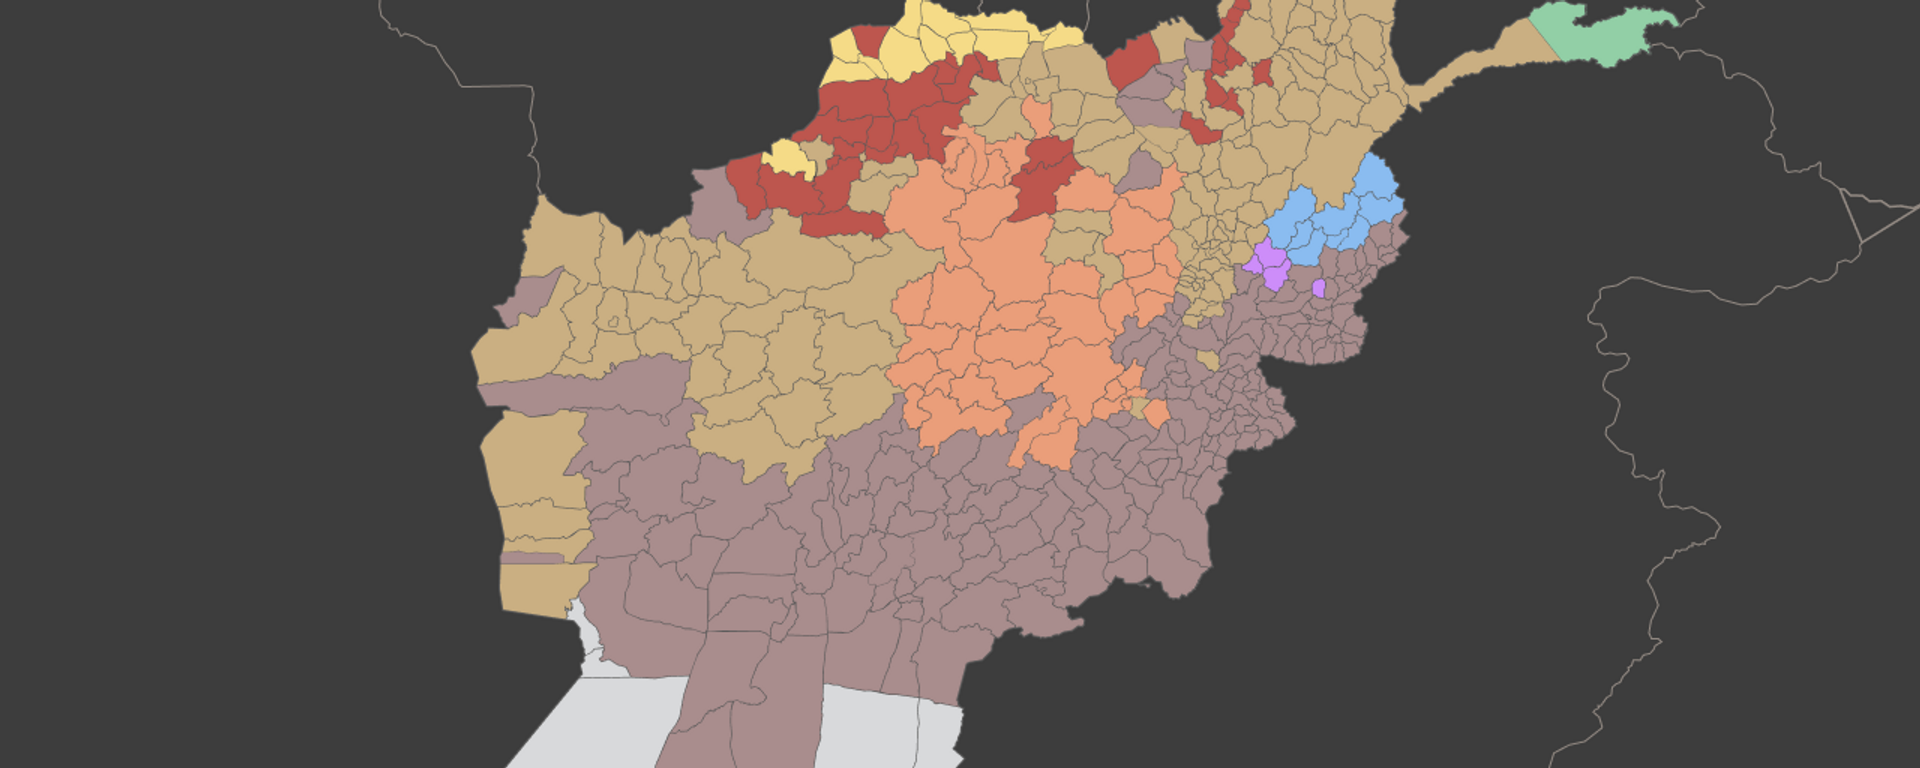 Las etnias que conforman Afganistán - Sputnik Mundo, 1920, 23.08.2021